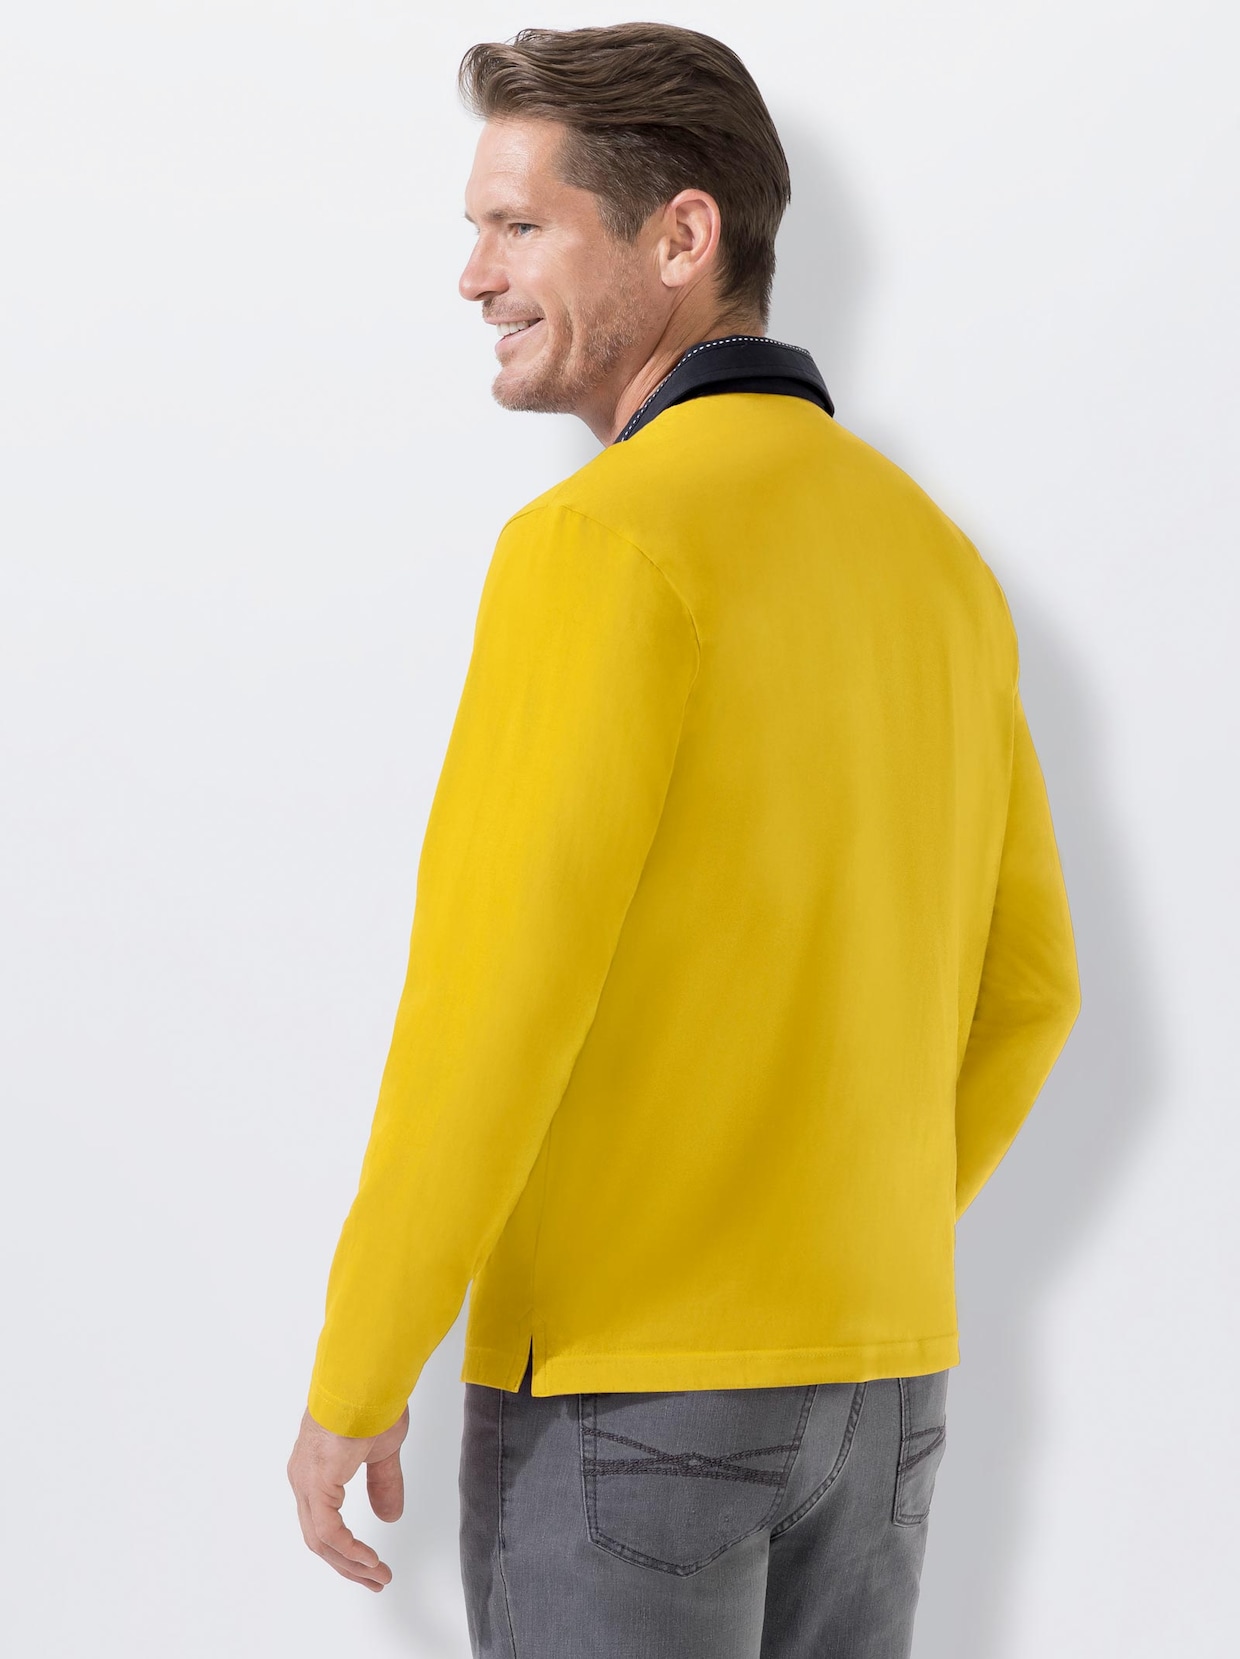 Catamaran Langarm-Shirt - gelb